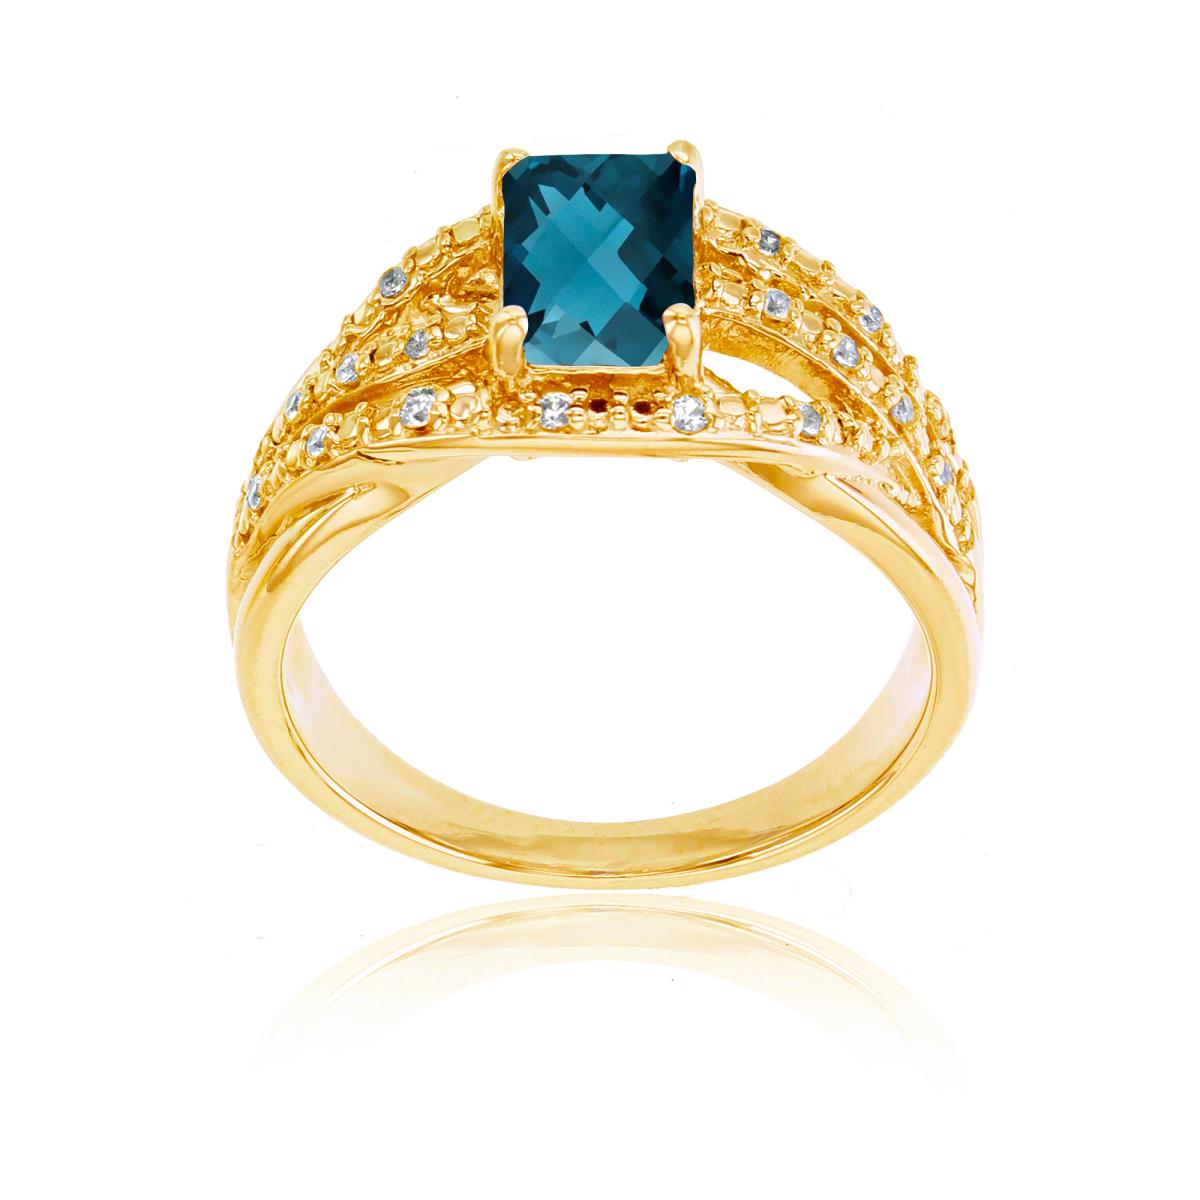 10K Yellow Gold 0.10 CTTW Rnd Diamond & 7x5mm Oct London Blue Topaz Ring